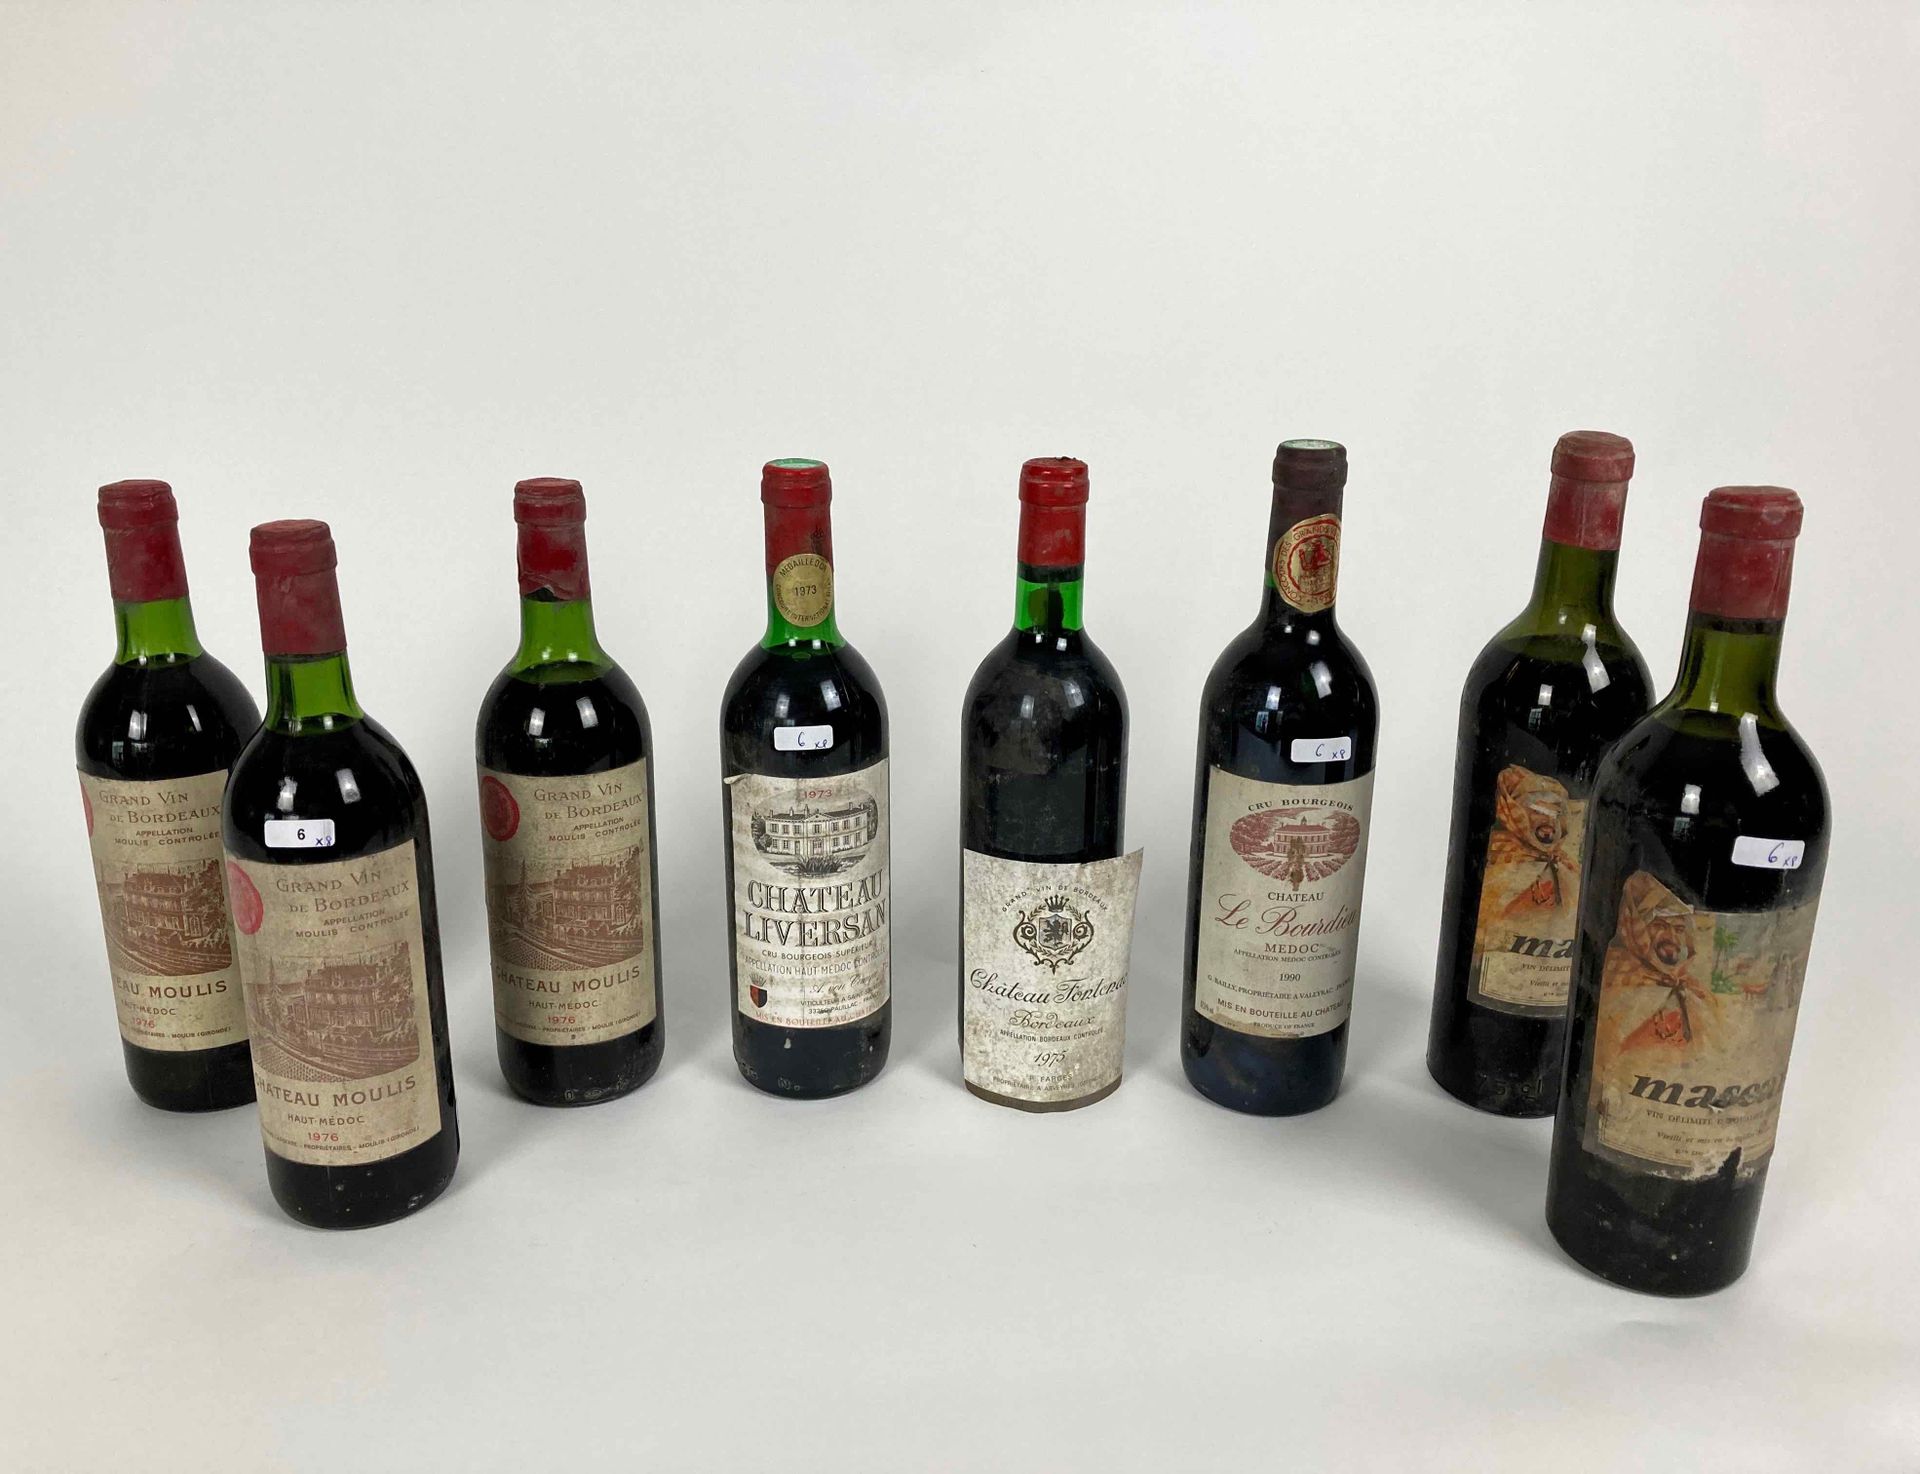 BORDEAUX Lote de seis botellas (rojo):

- (HAUT-MÉDOC), Château Liversan, cru bo&hellip;